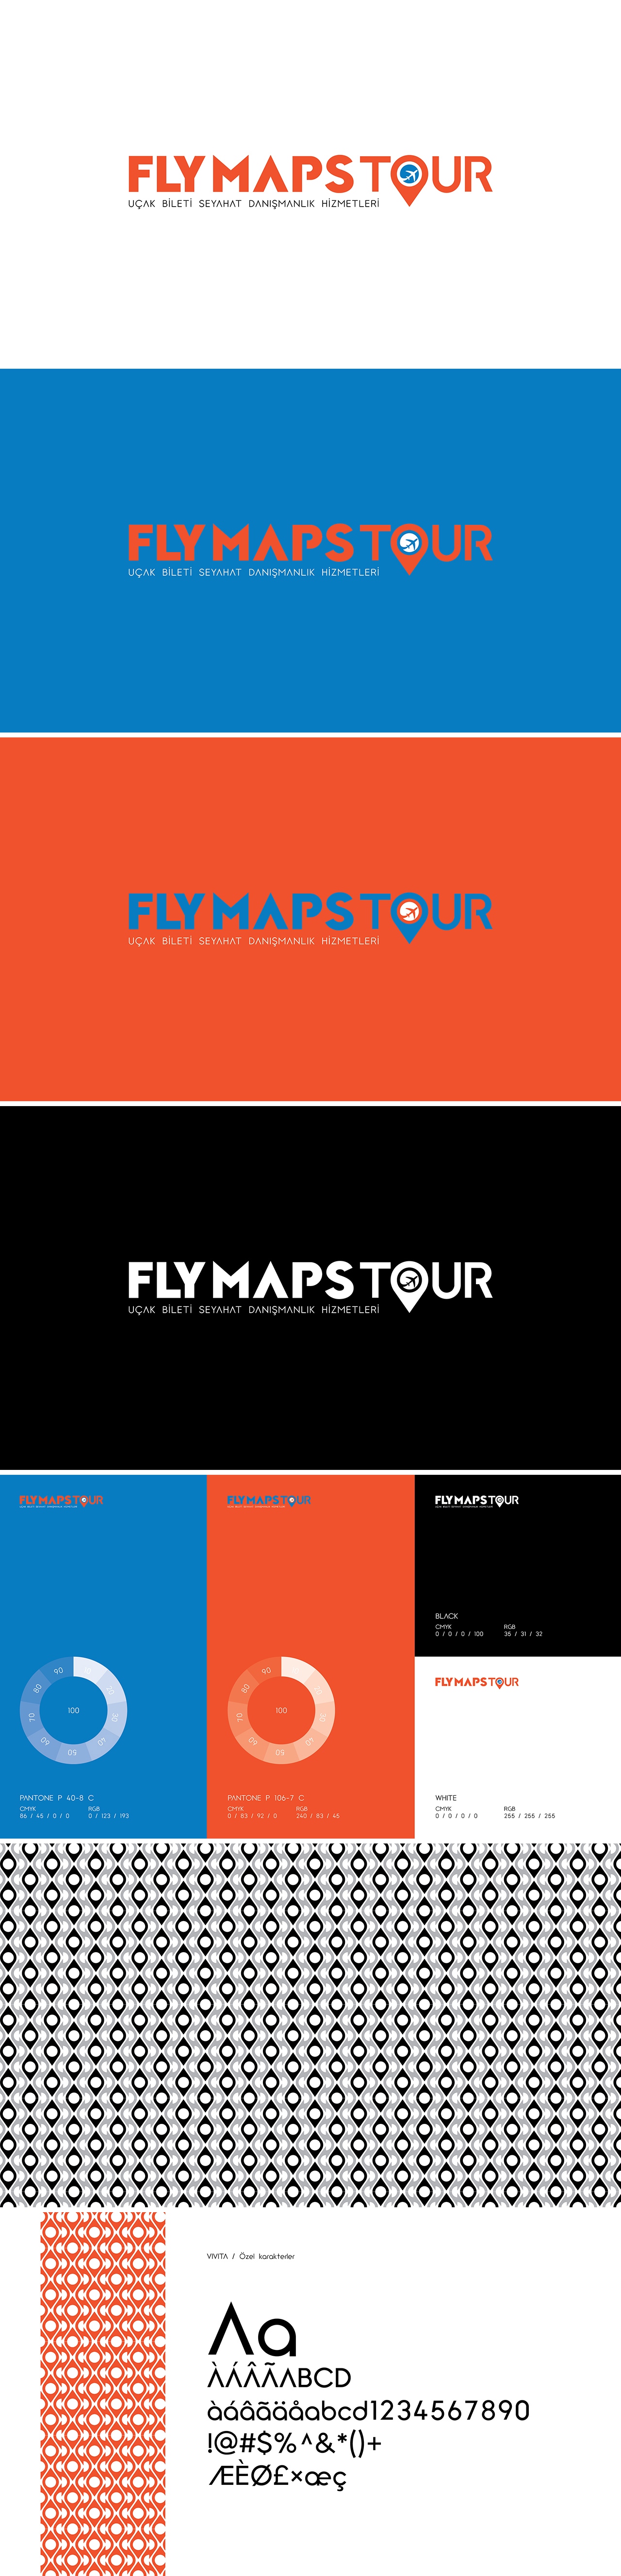 Fly Maps Tour LOGO Görselleri